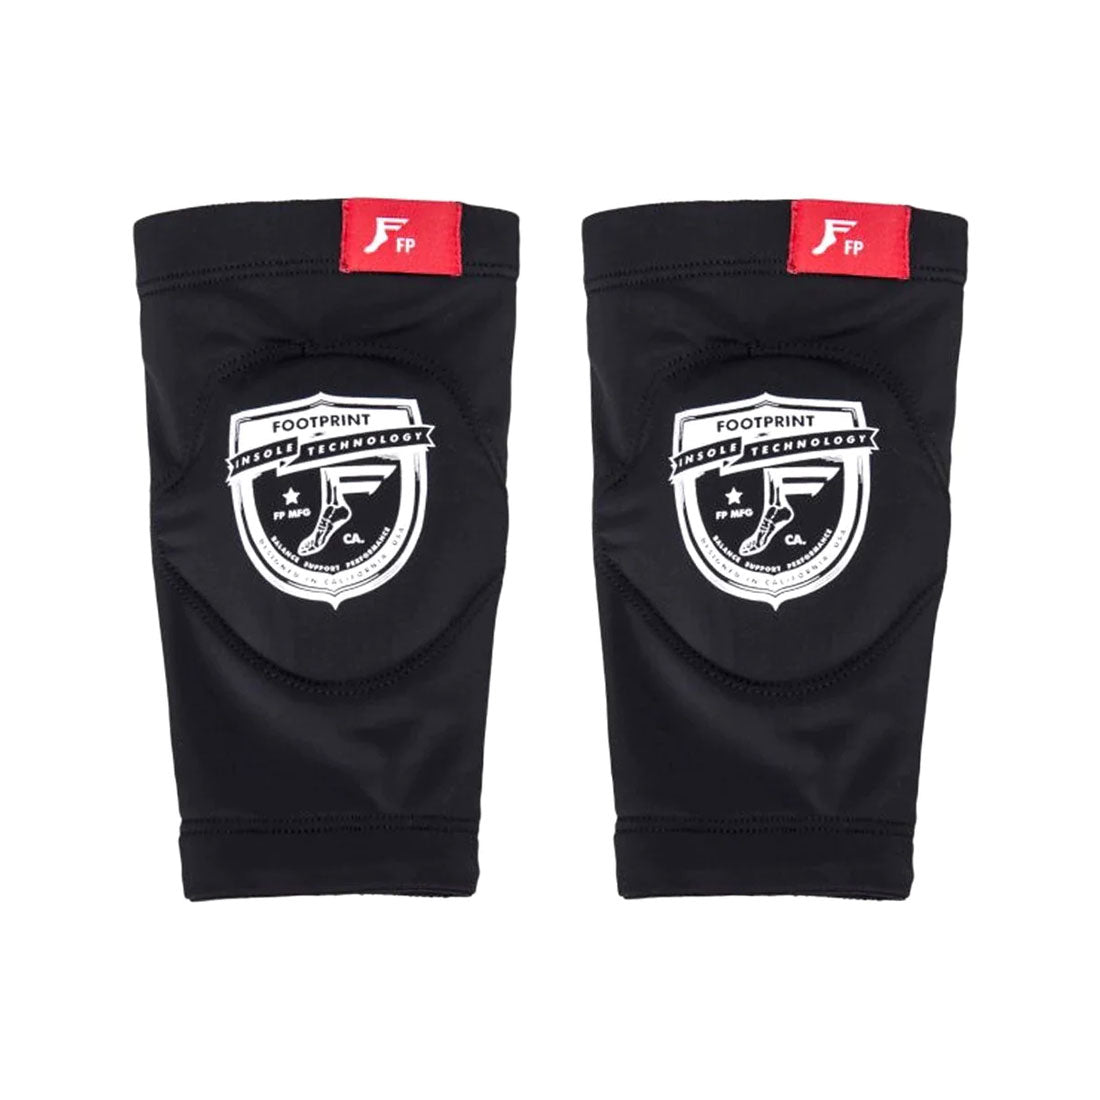 Footprint Lo Pro Elbow Sleeves - Medium Protective Gear